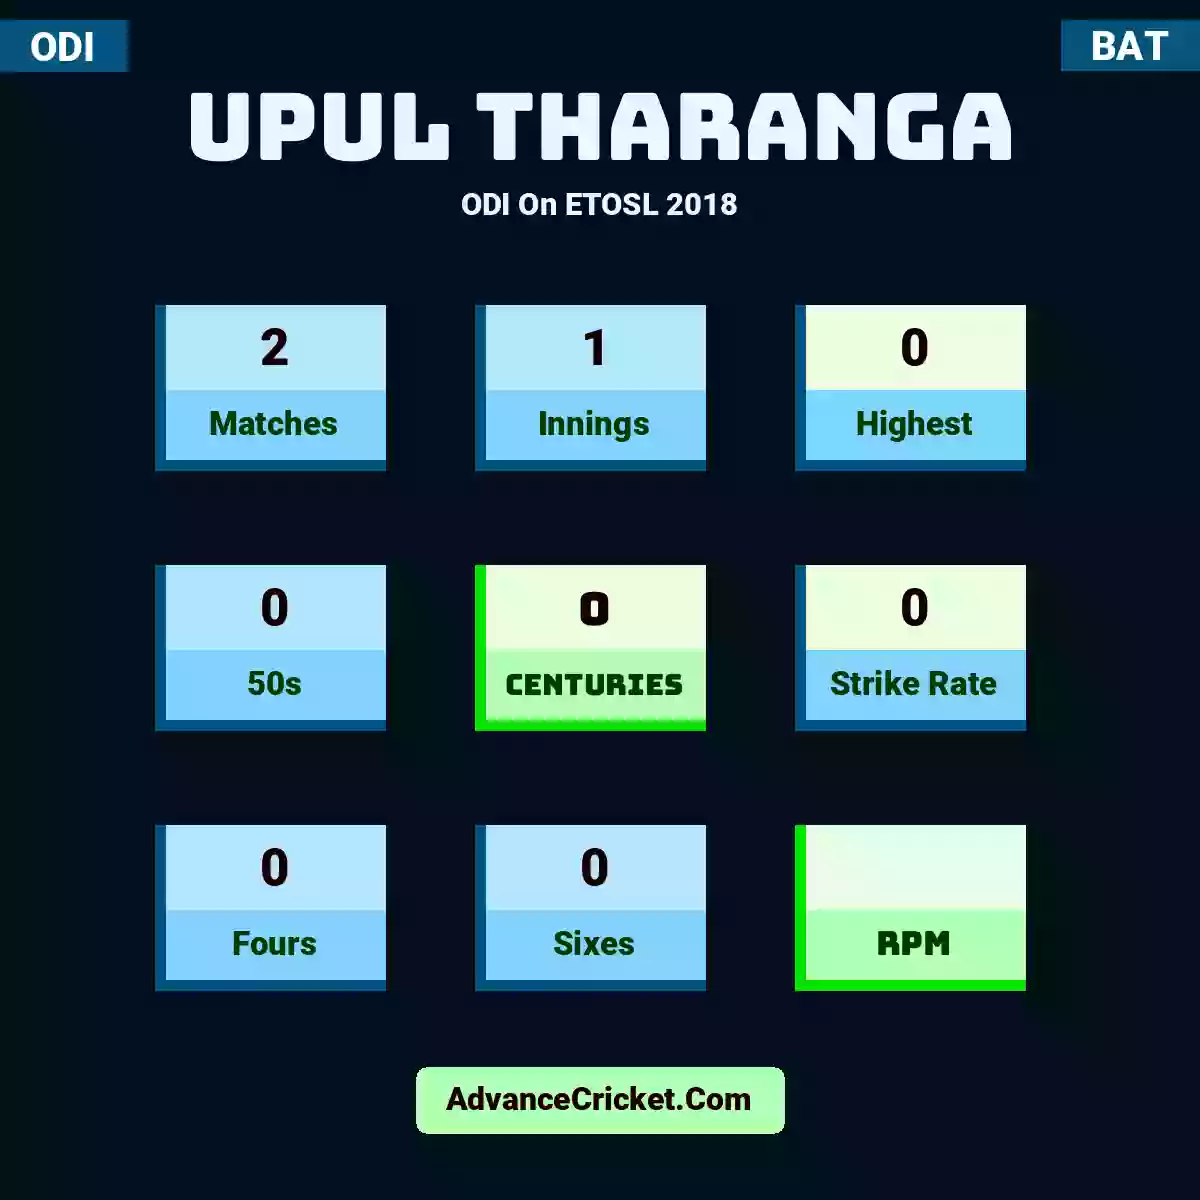 Upul Tharanga ODI  On ETOSL 2018, Upul Tharanga played 2 matches, scored 0 runs as highest, 0 half-centuries, and 0 centuries, with a strike rate of 0. U.Tharanga hit 0 fours and 0 sixes.